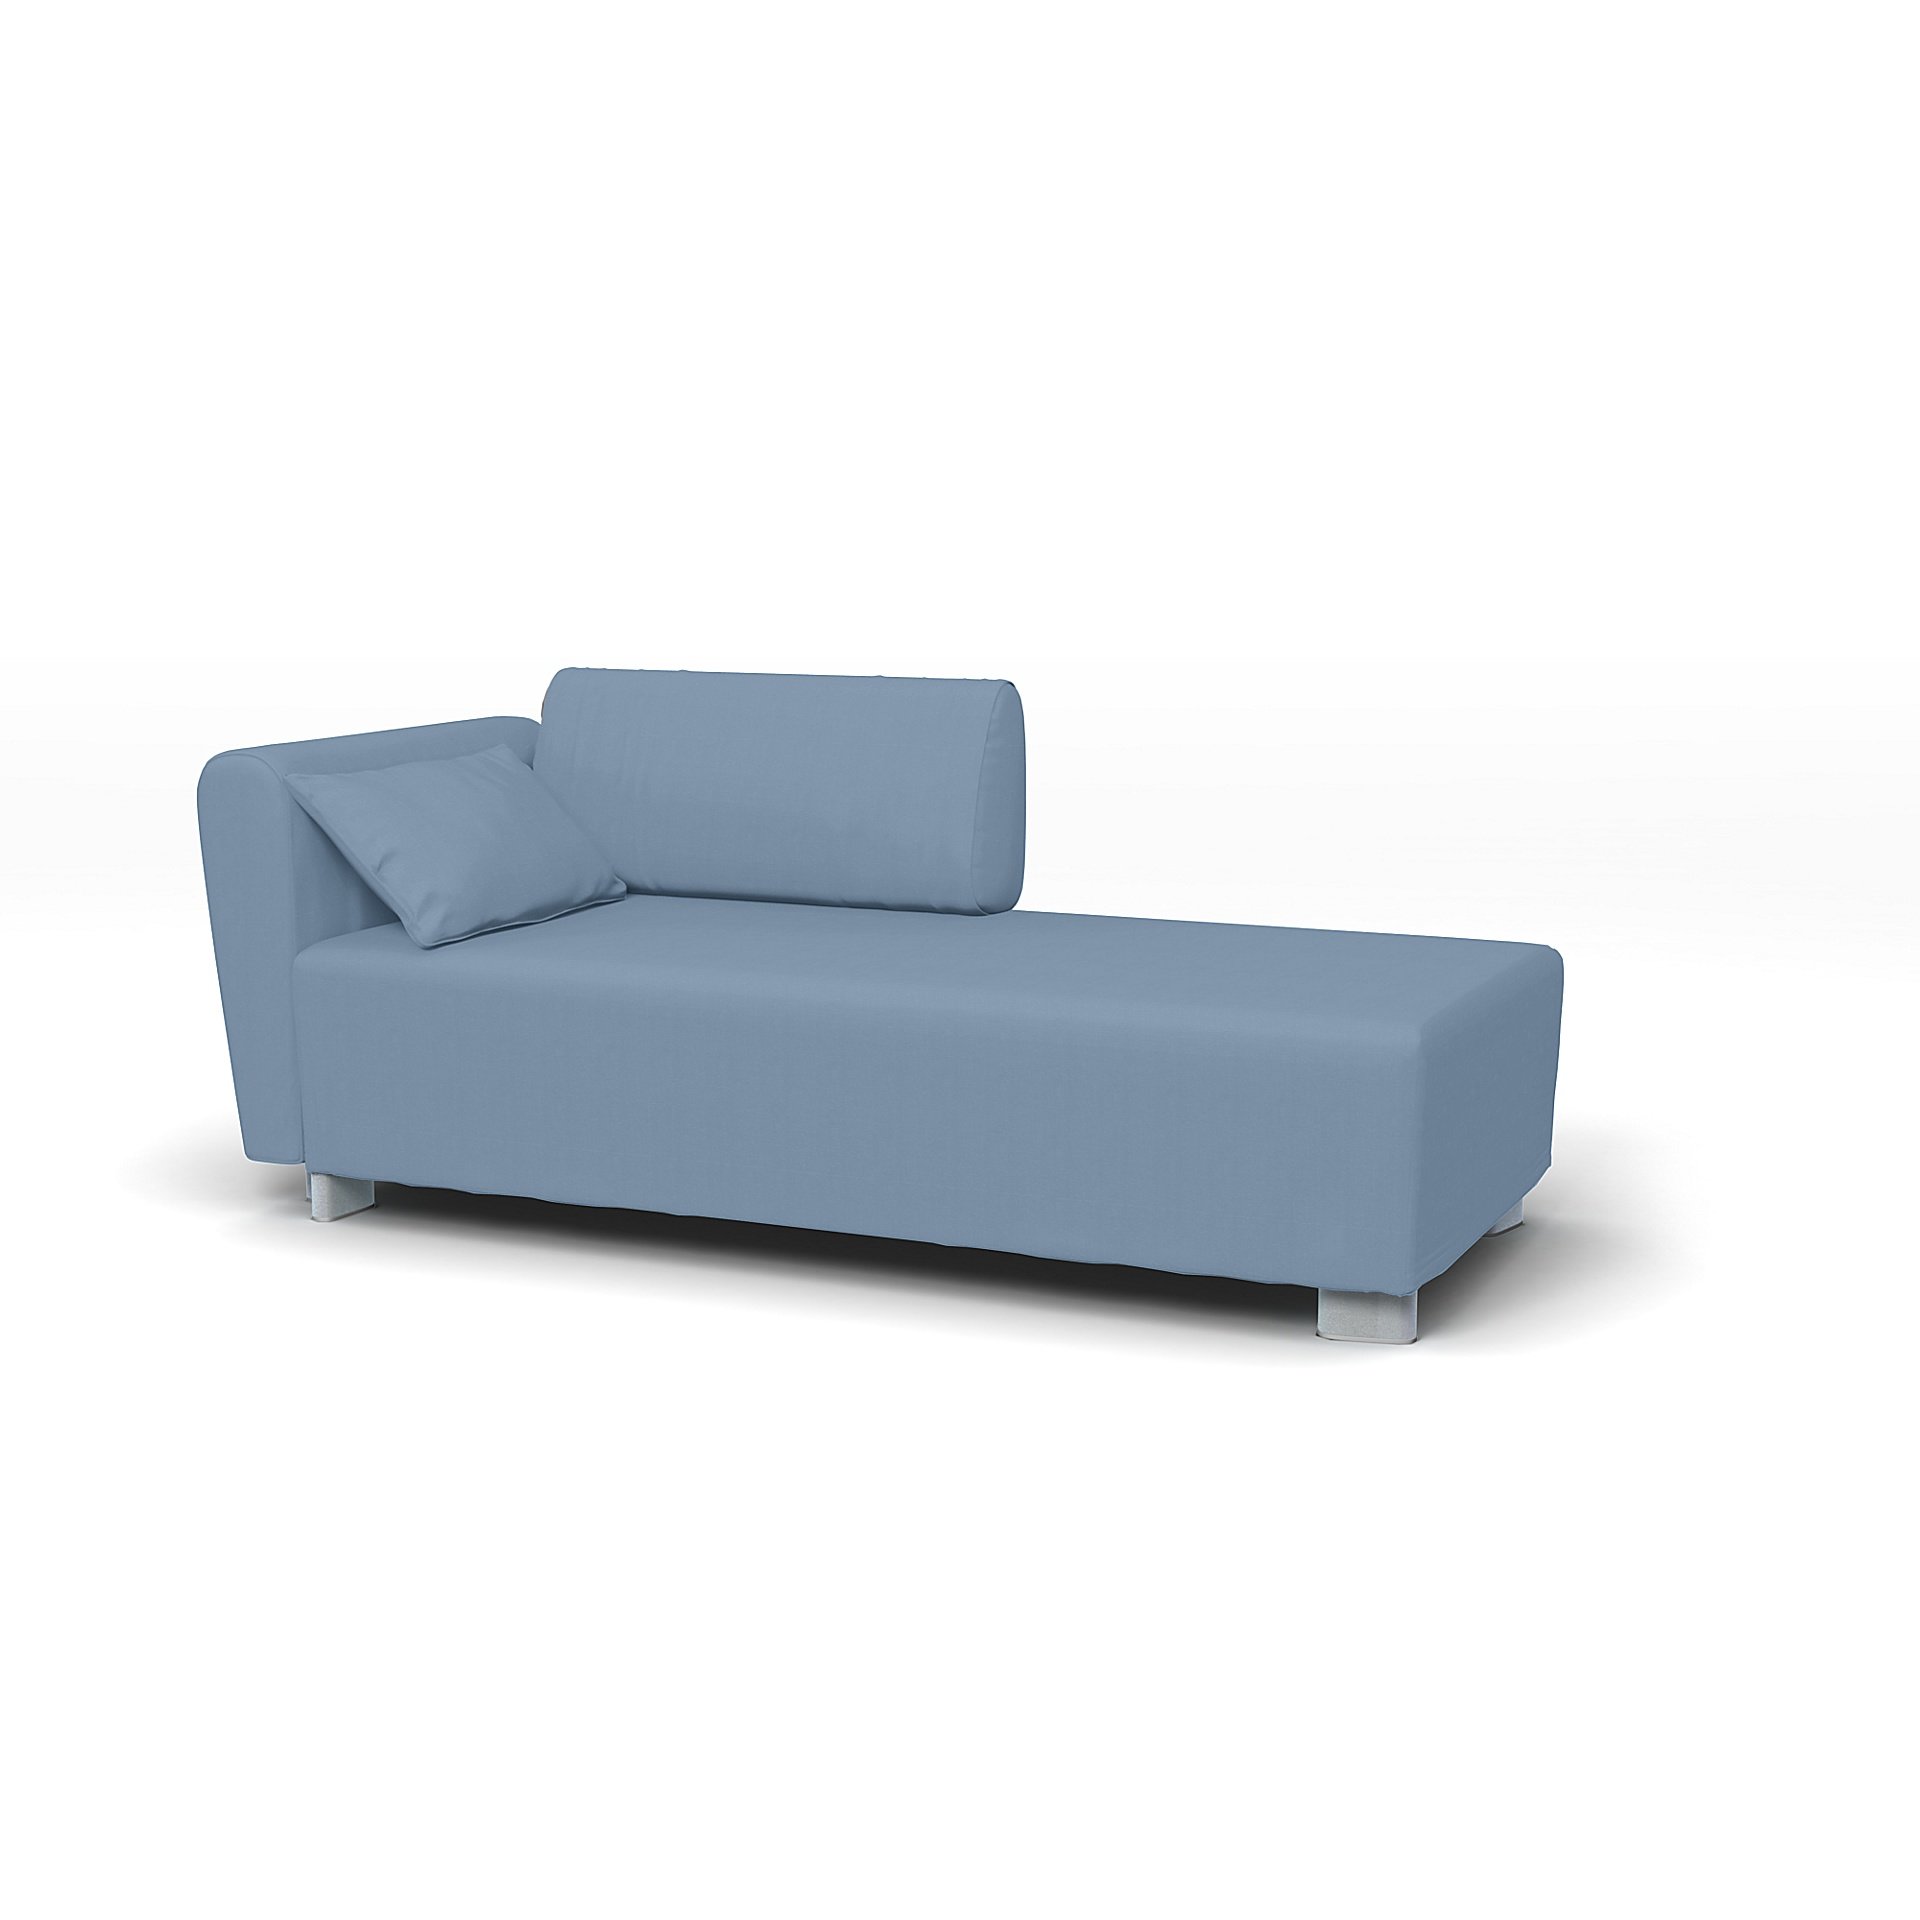 IKEA - Mysinge Chaise Longue with Armrest Cover, Dusty Blue, Cotton - Bemz